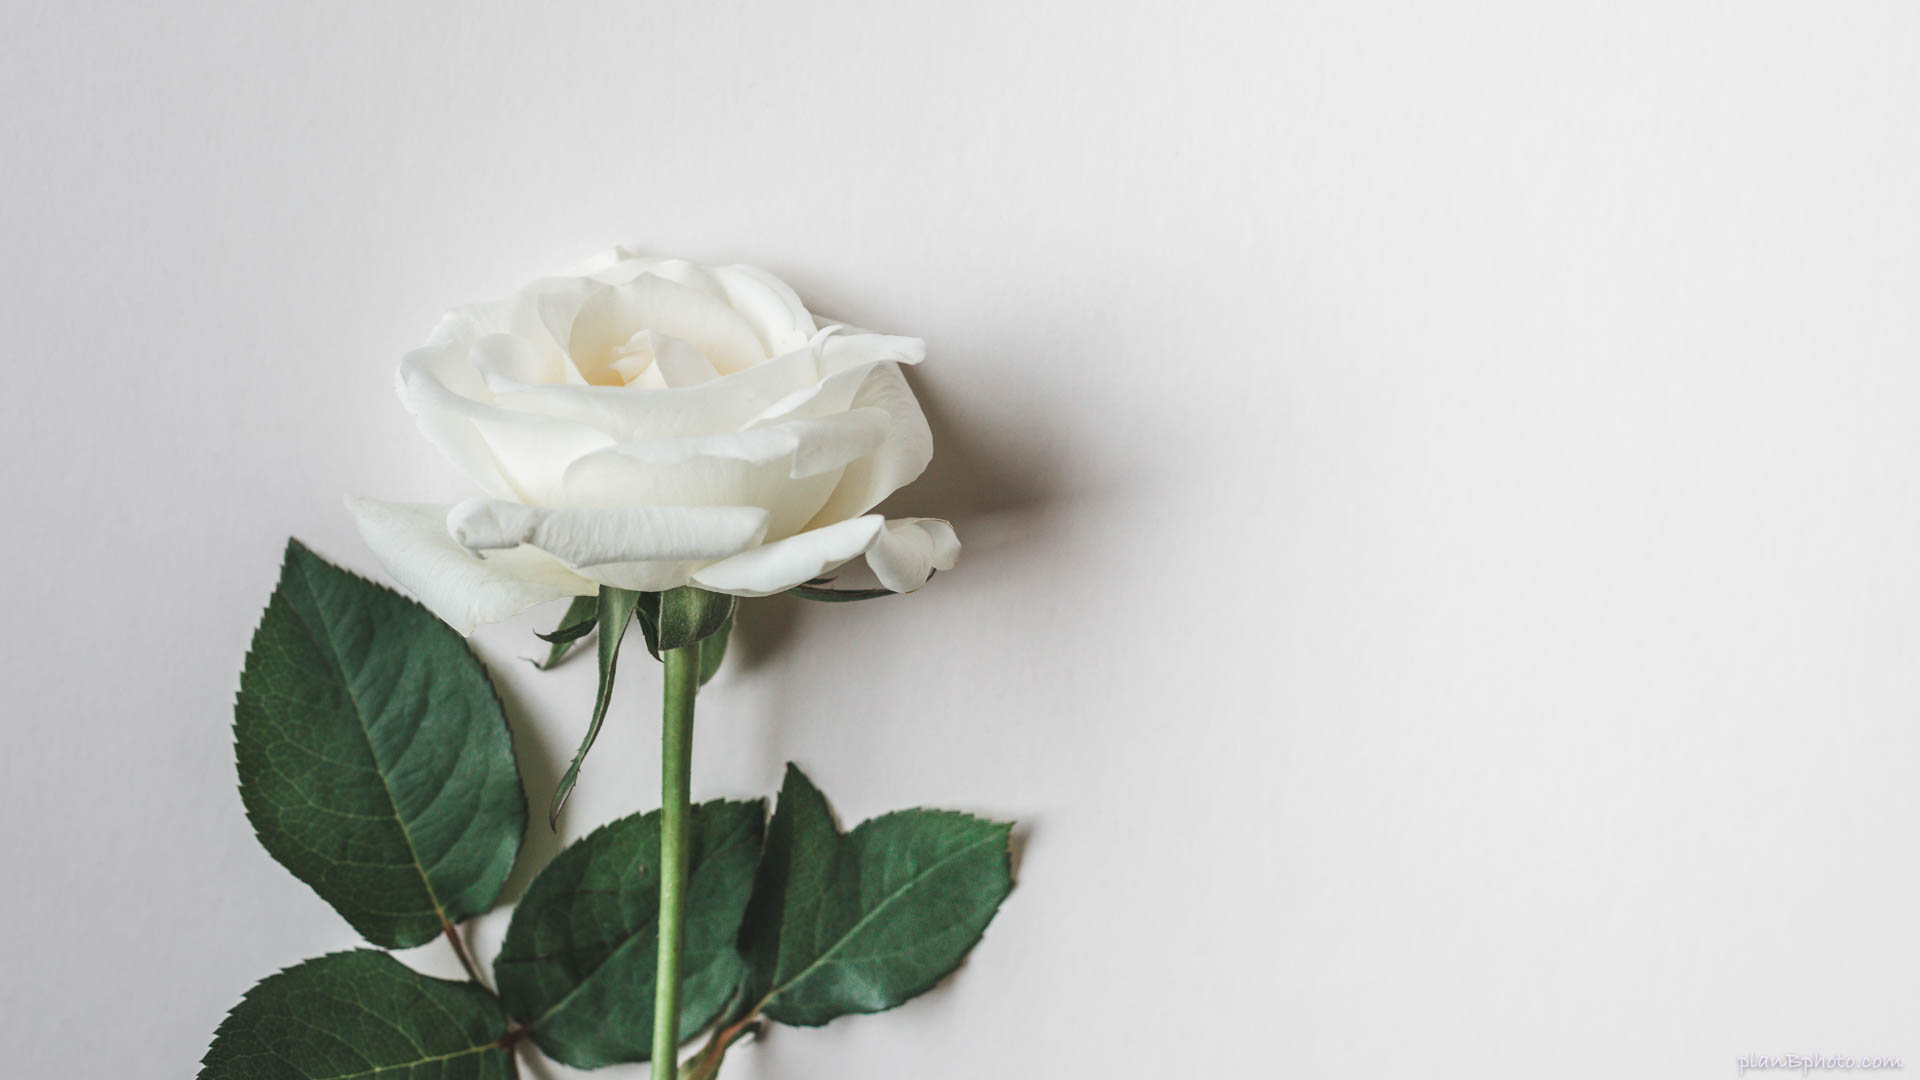 White rose on white background